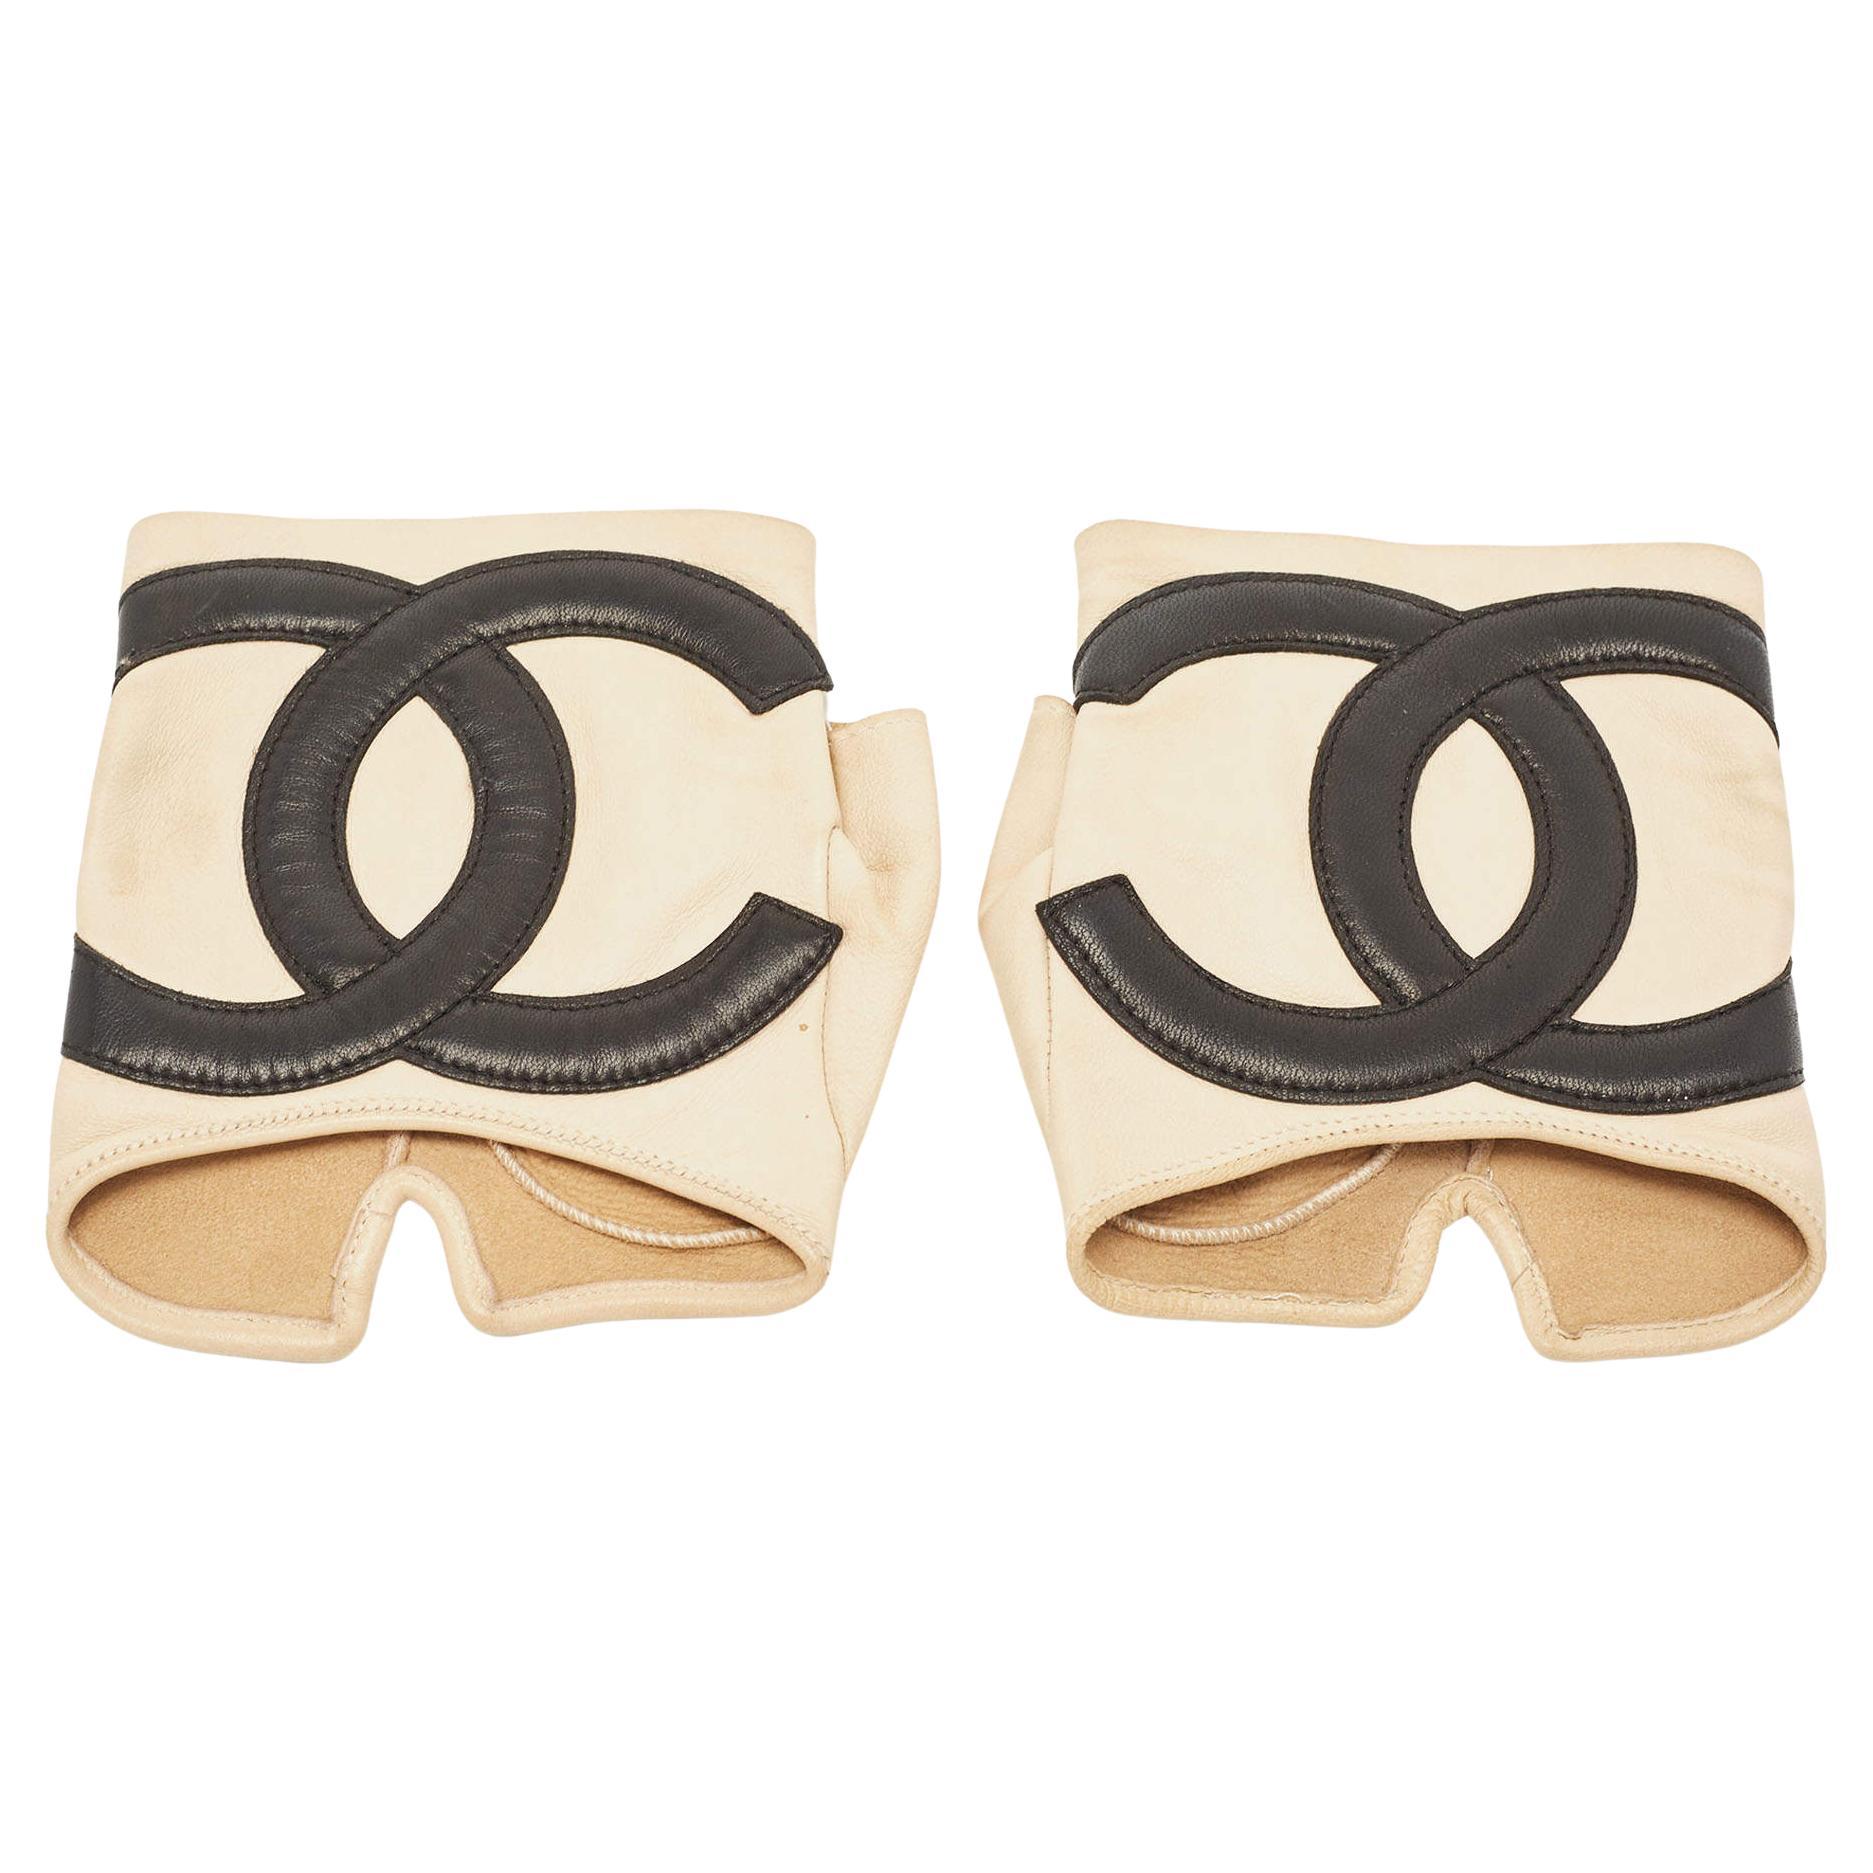 Chanel Beige/Black Leather CC Fingerless Gloves Size 8